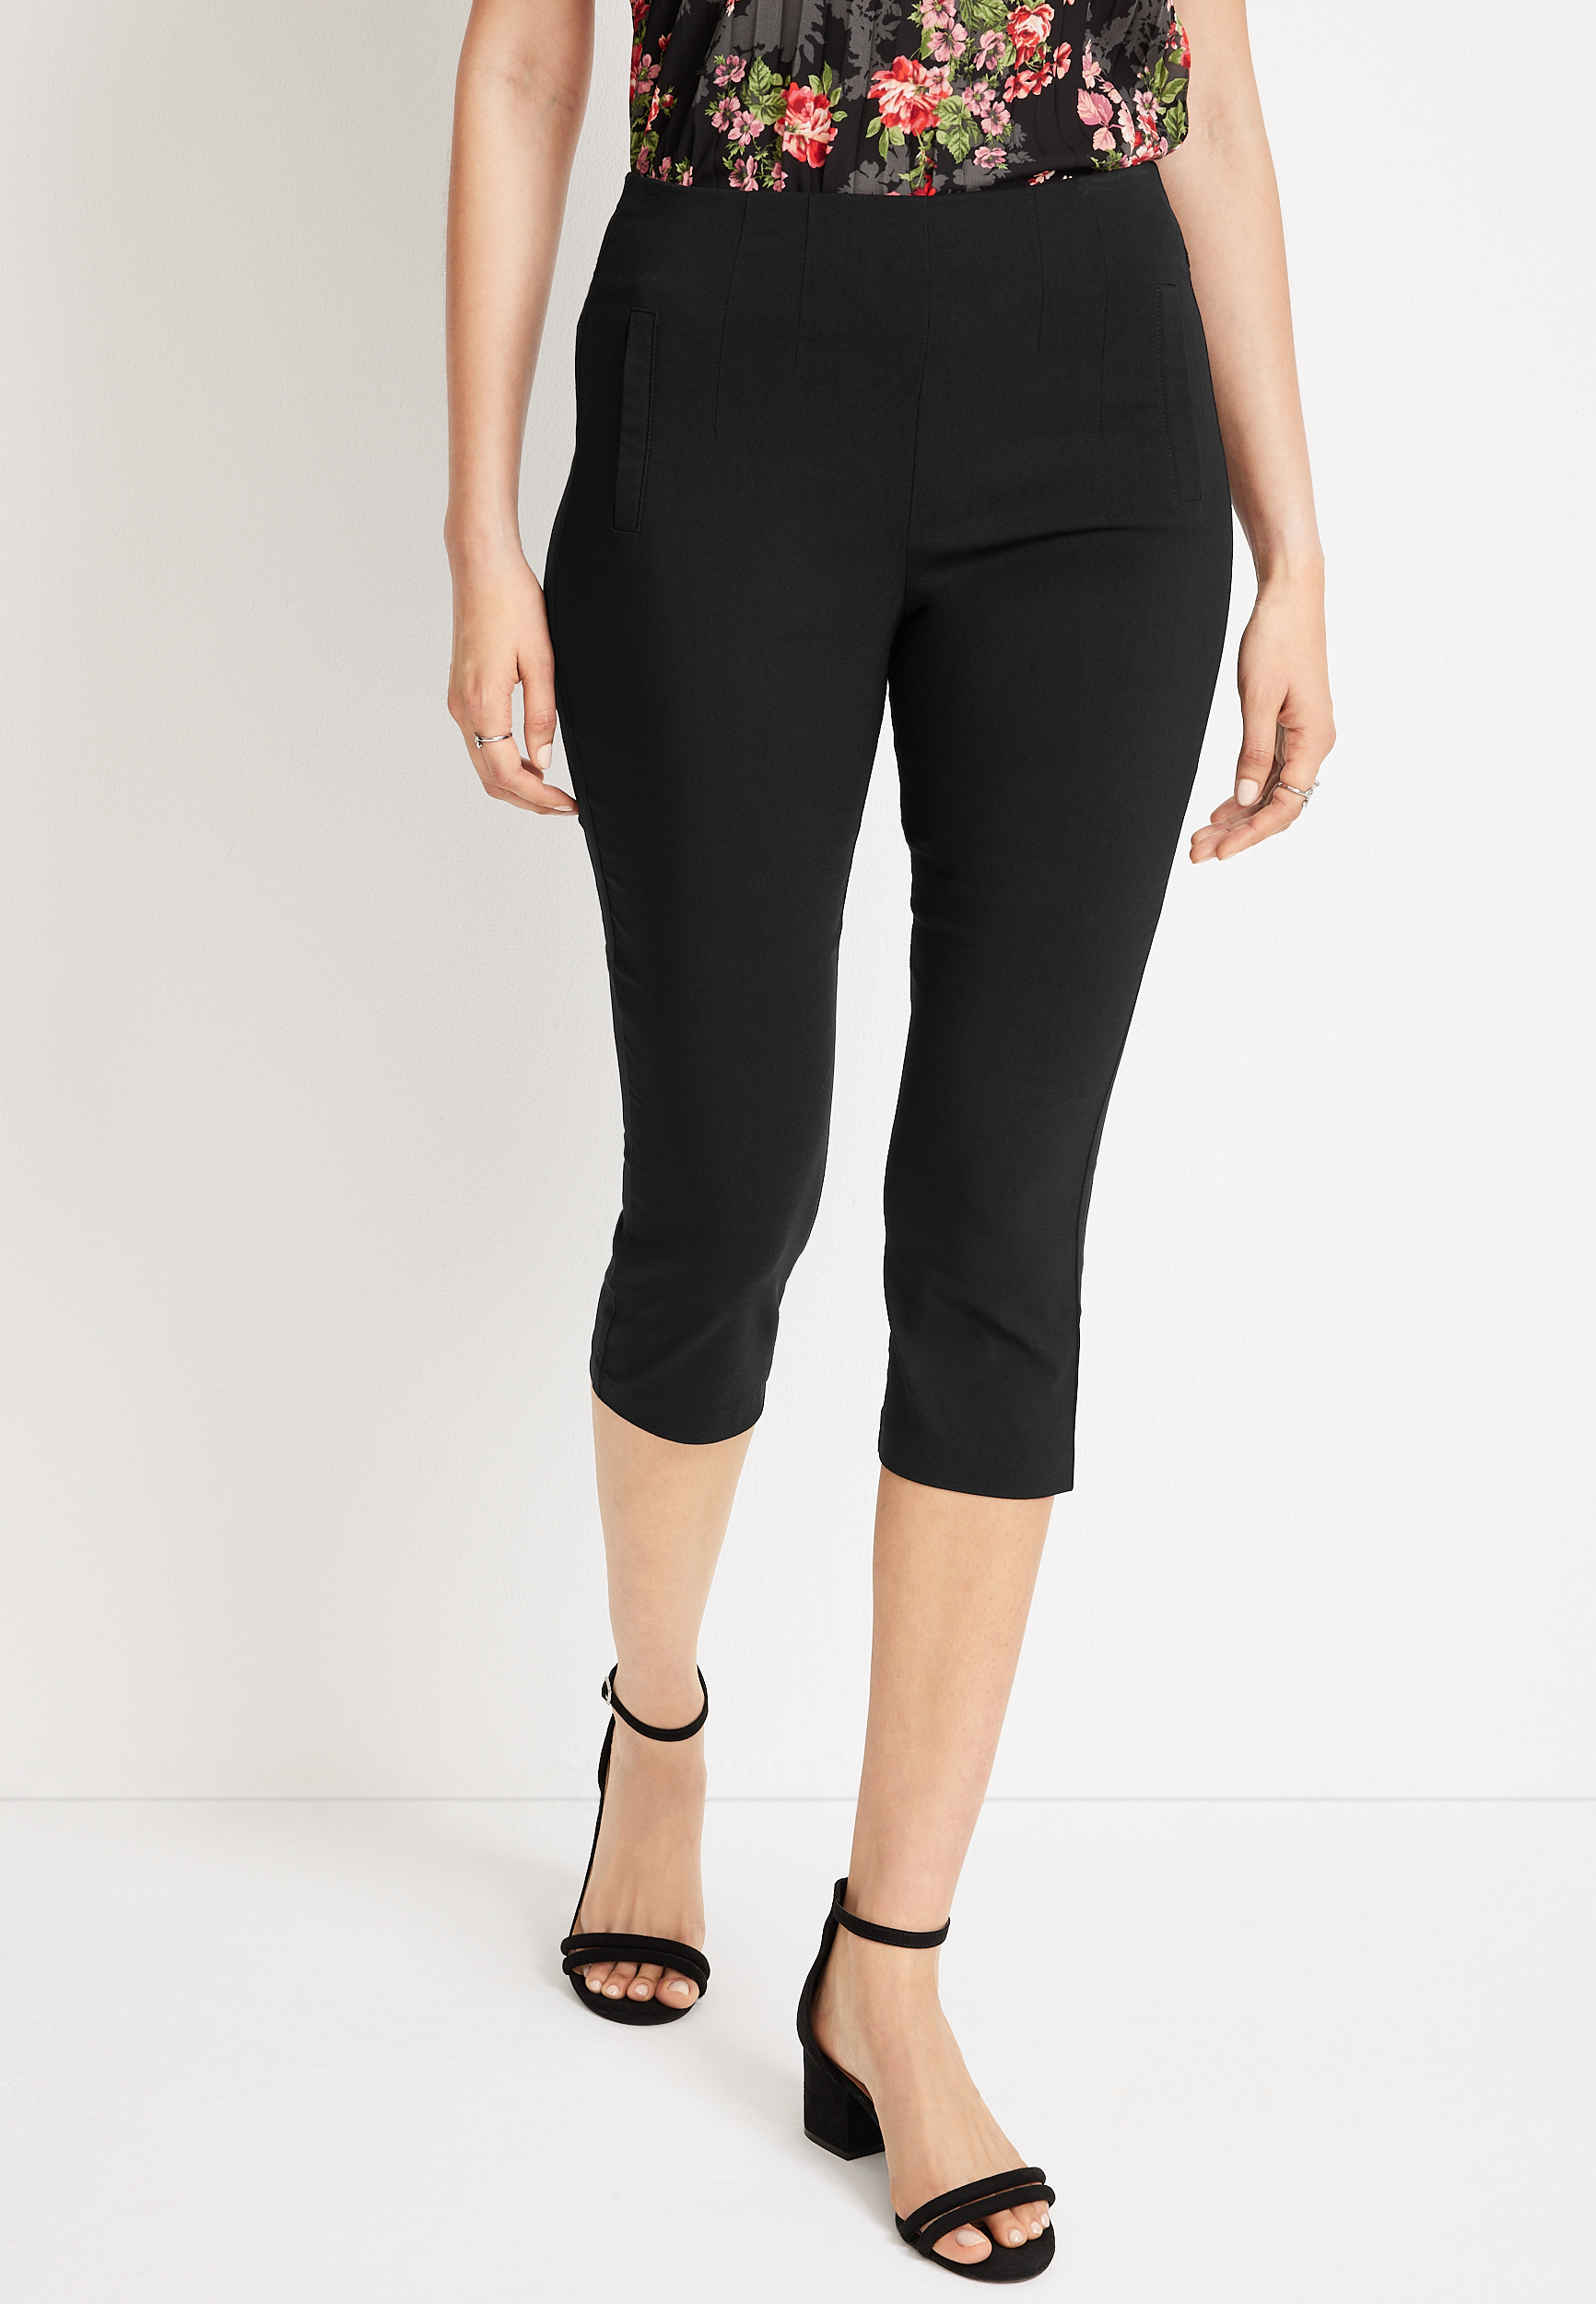 KATIES - Womens Pants - Black - Classic Crop Pant - Cropped - Capri - Calf  Length - Slim Fit - Lightweight - Stretch Fabric - Summer Women's Clothing